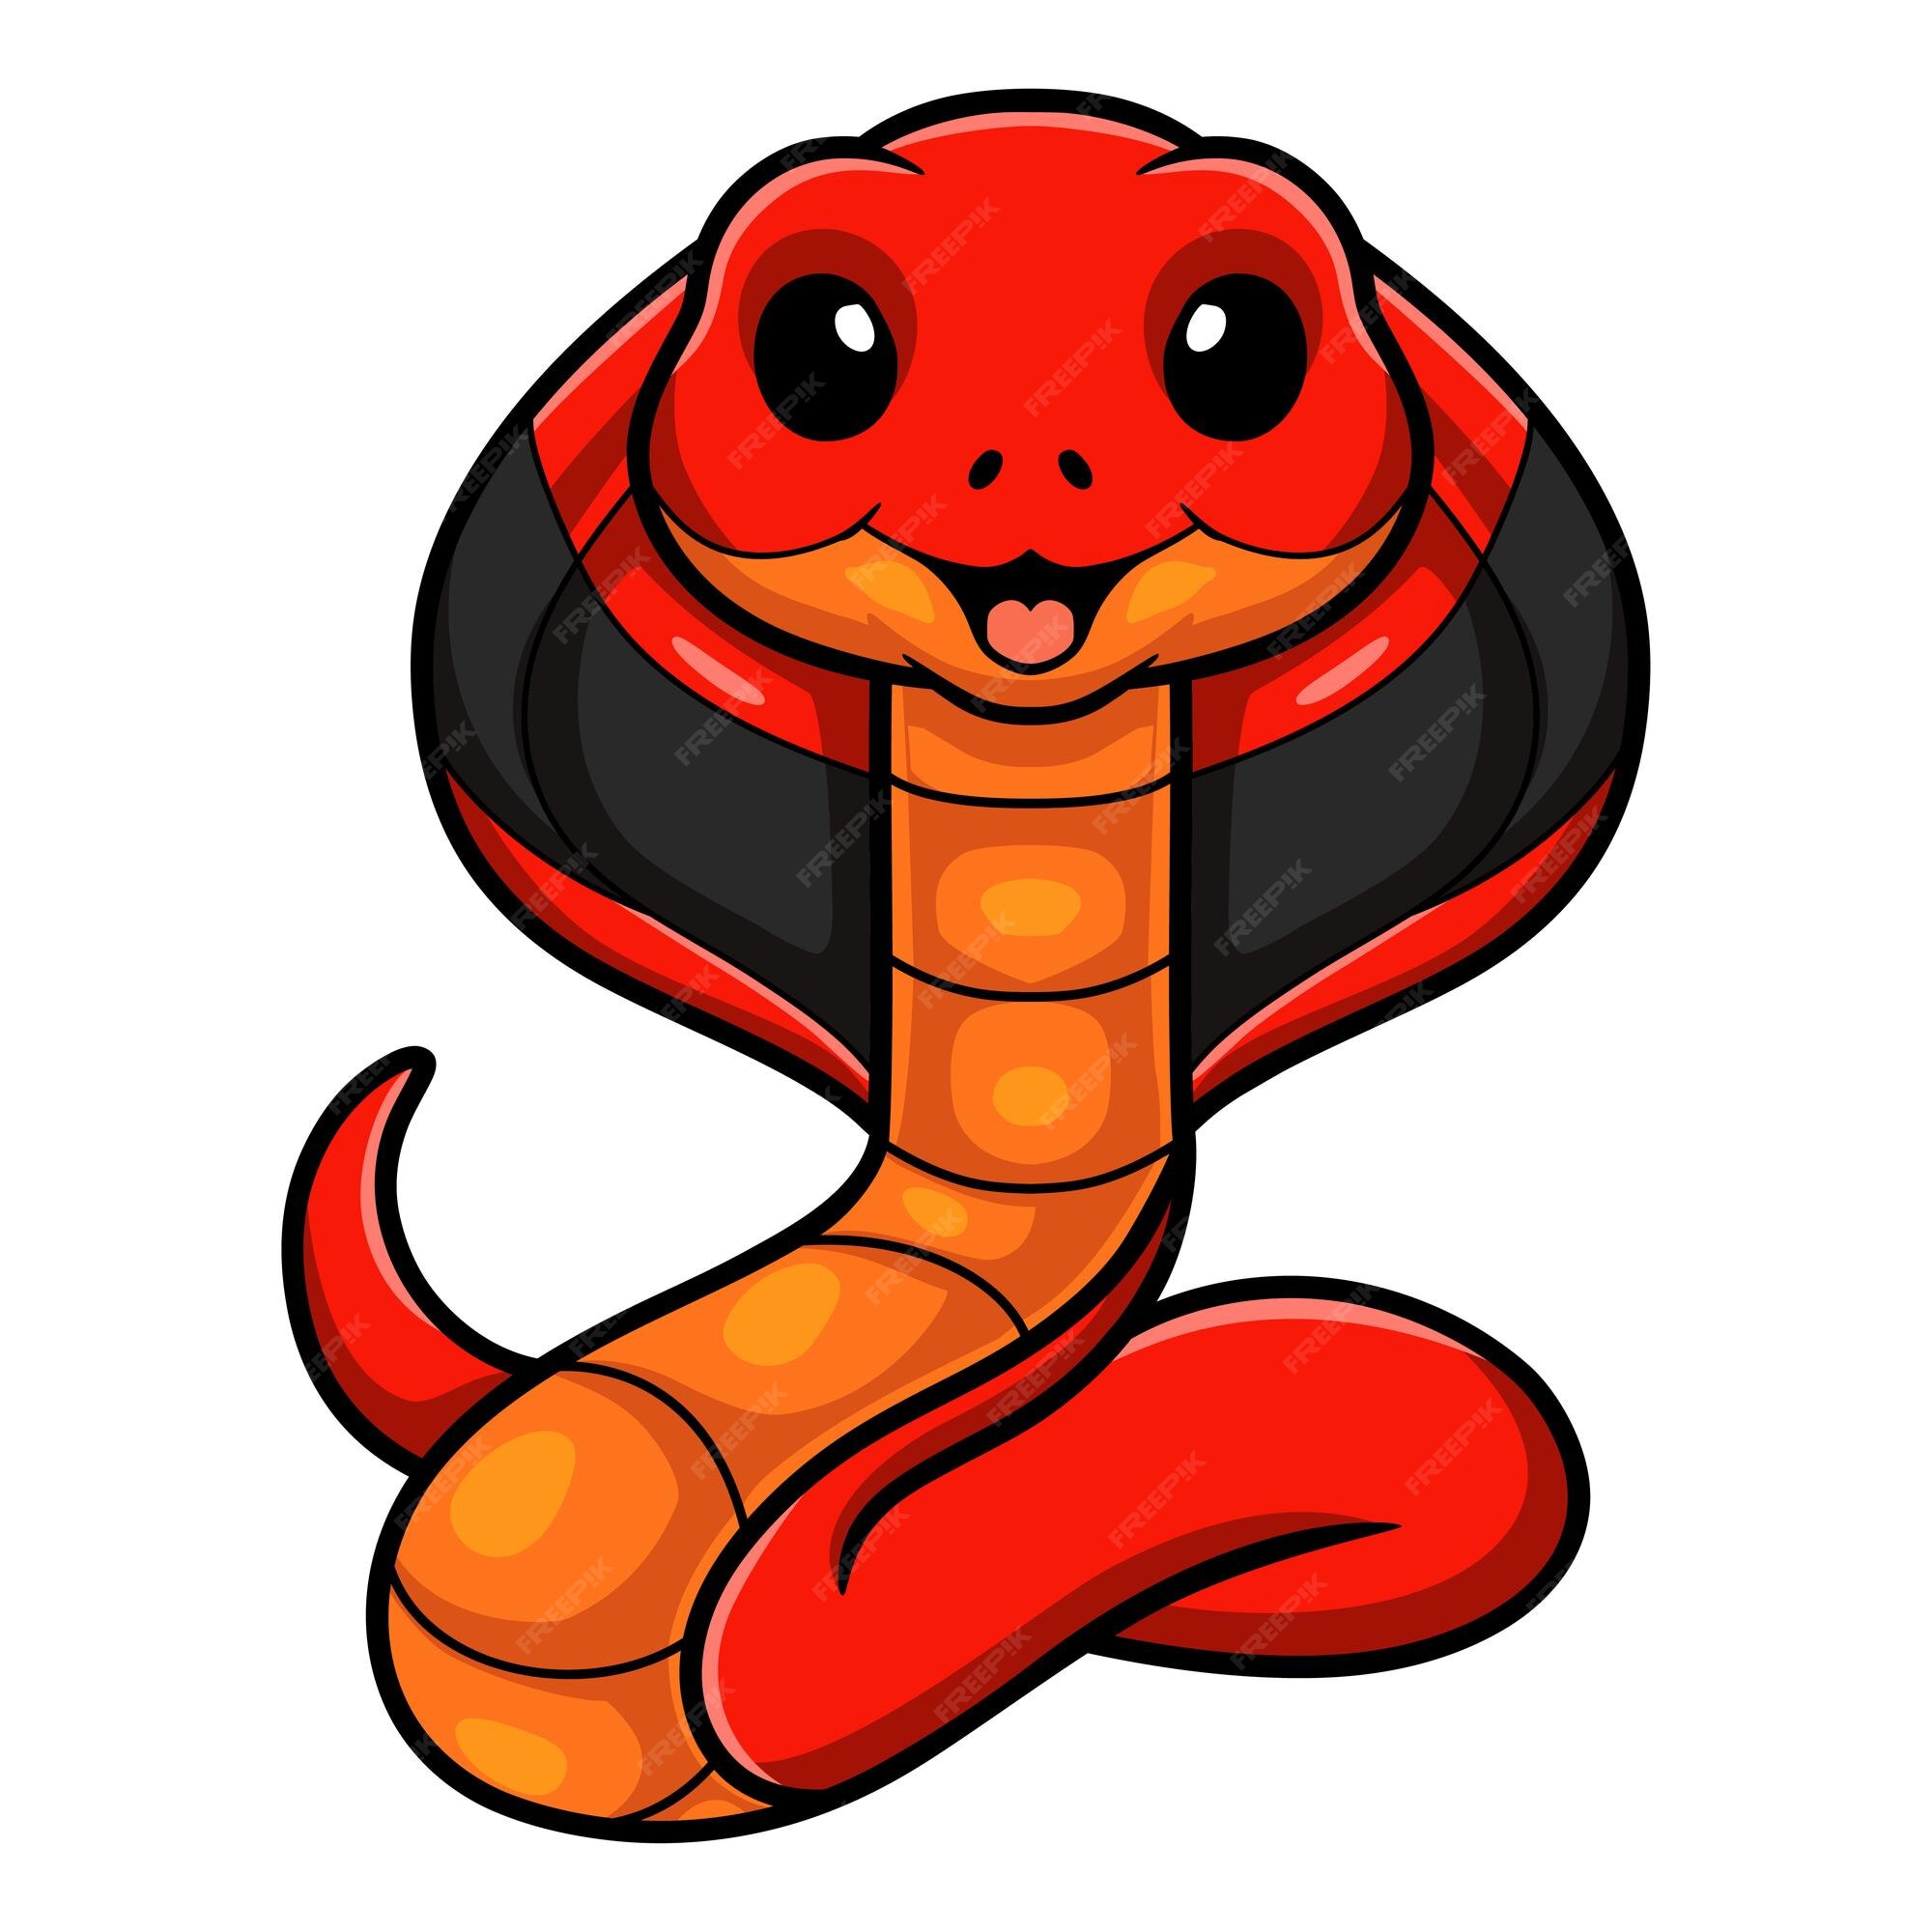 Premium Vector | Cute red spitting cobra cartoon